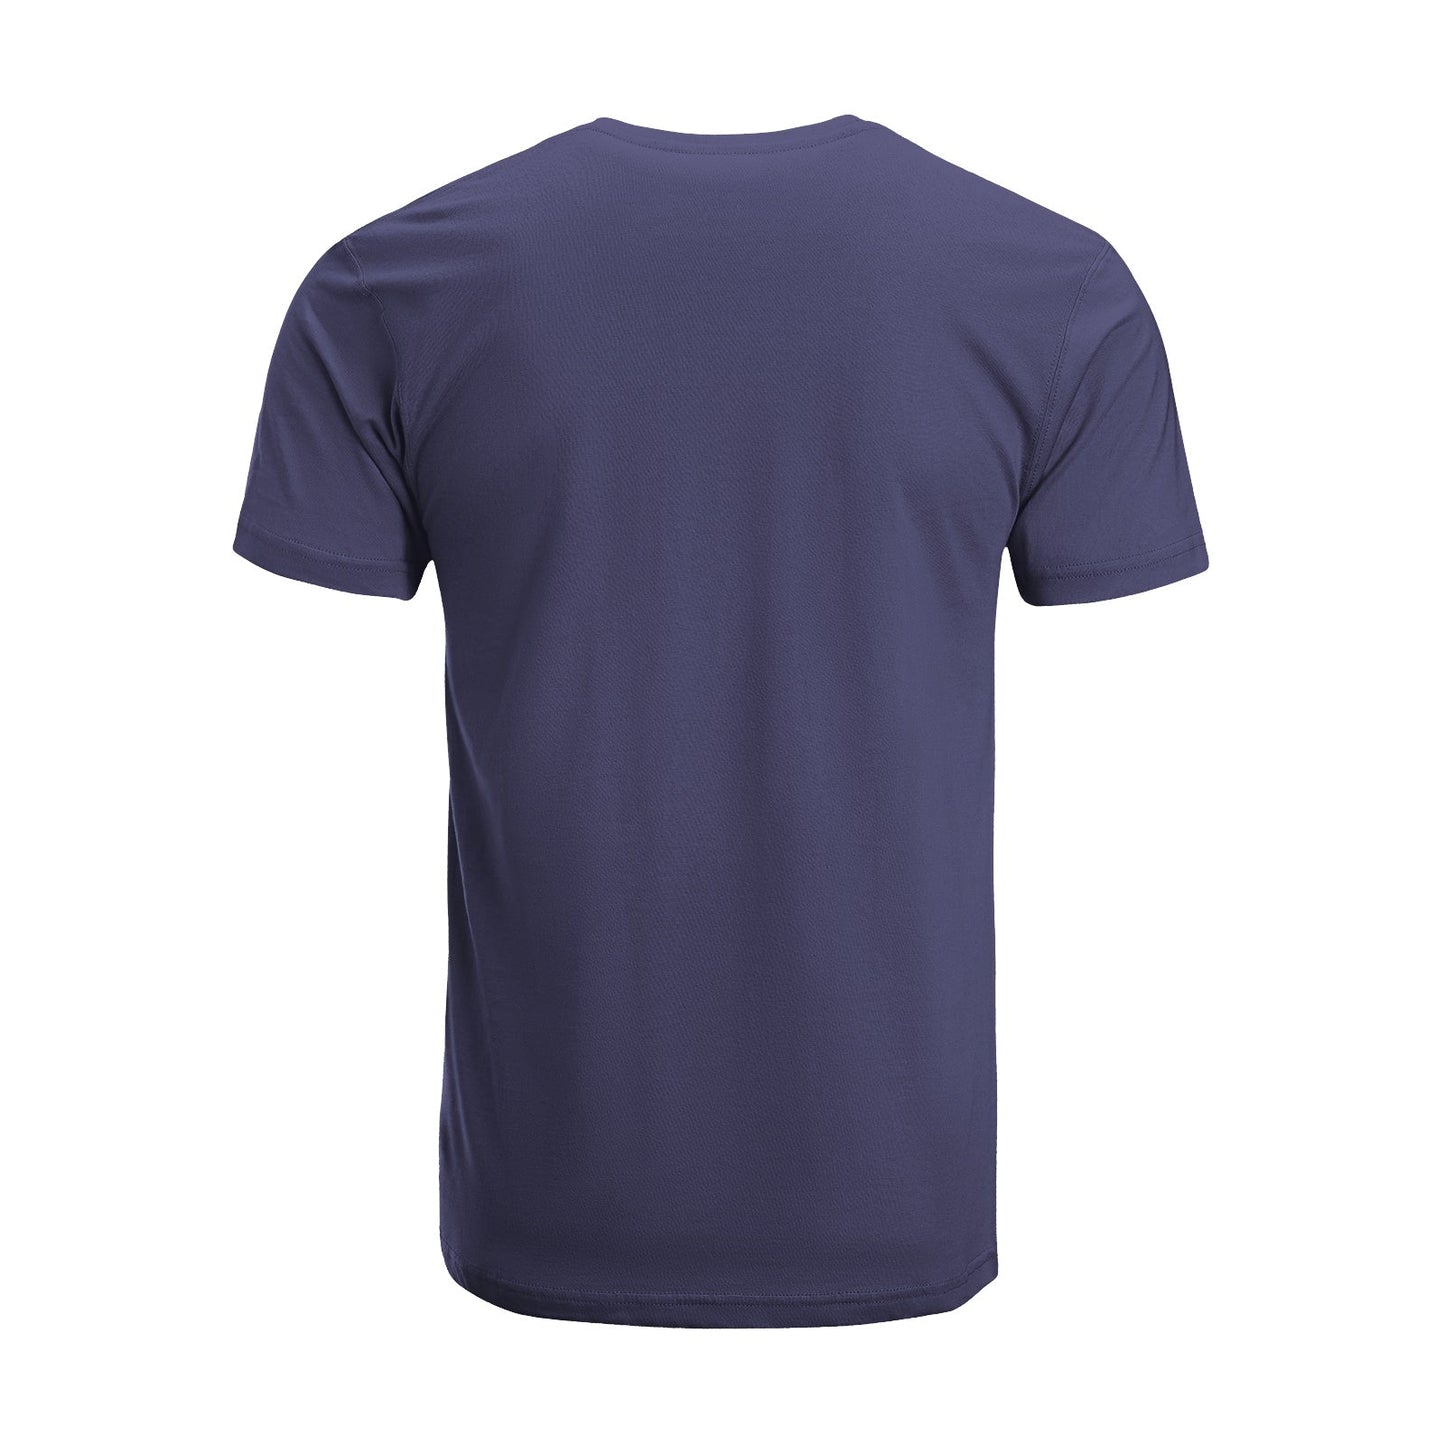 Unisex Short Sleeve Crew Neck Cotton Jersey T-Shirt USA 45